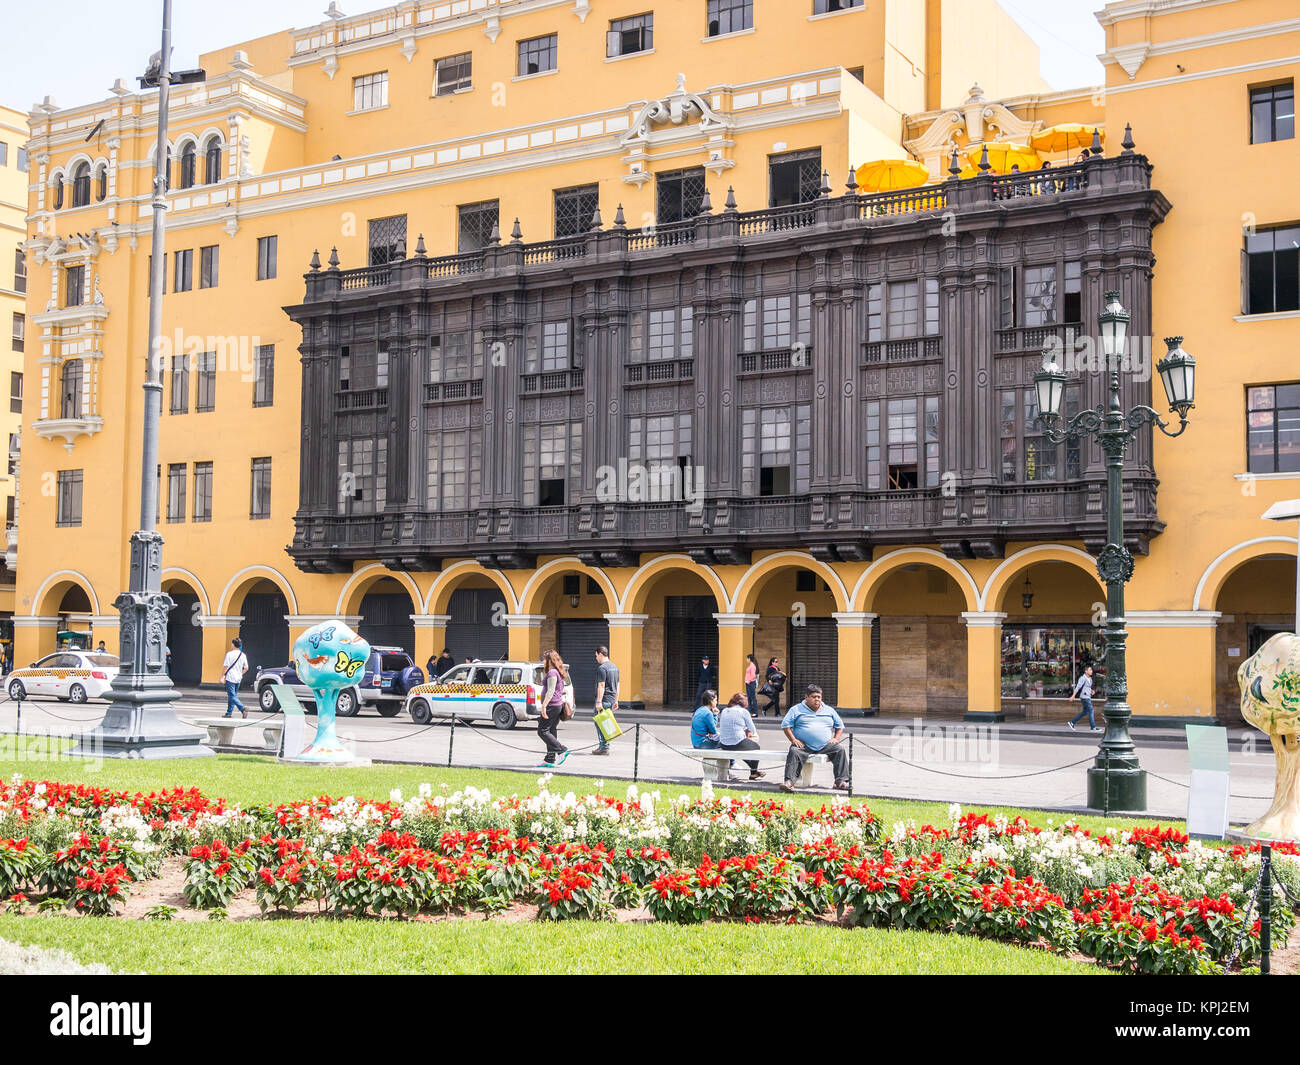 Lima, Peru - October 11, 2014 - Spanish colonial era facades in Lima Plaza de Armas (Main Square) Stock Photo